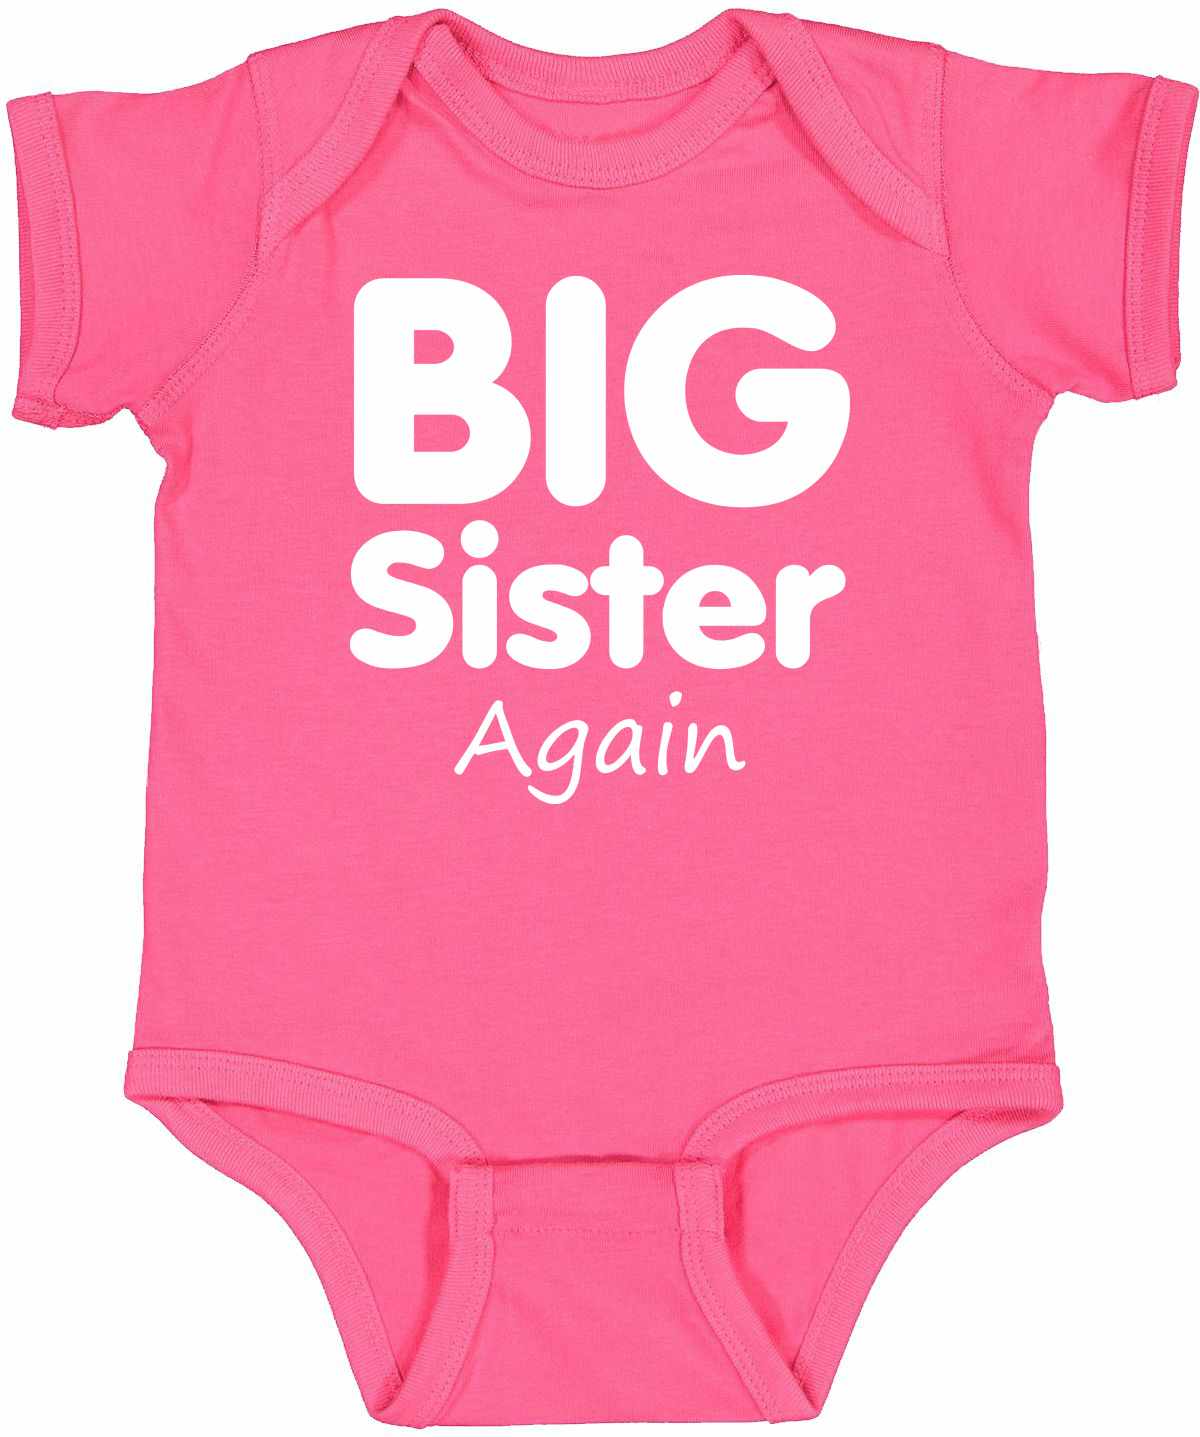 Big Sister Again on Infant BodySuit (#859-10)